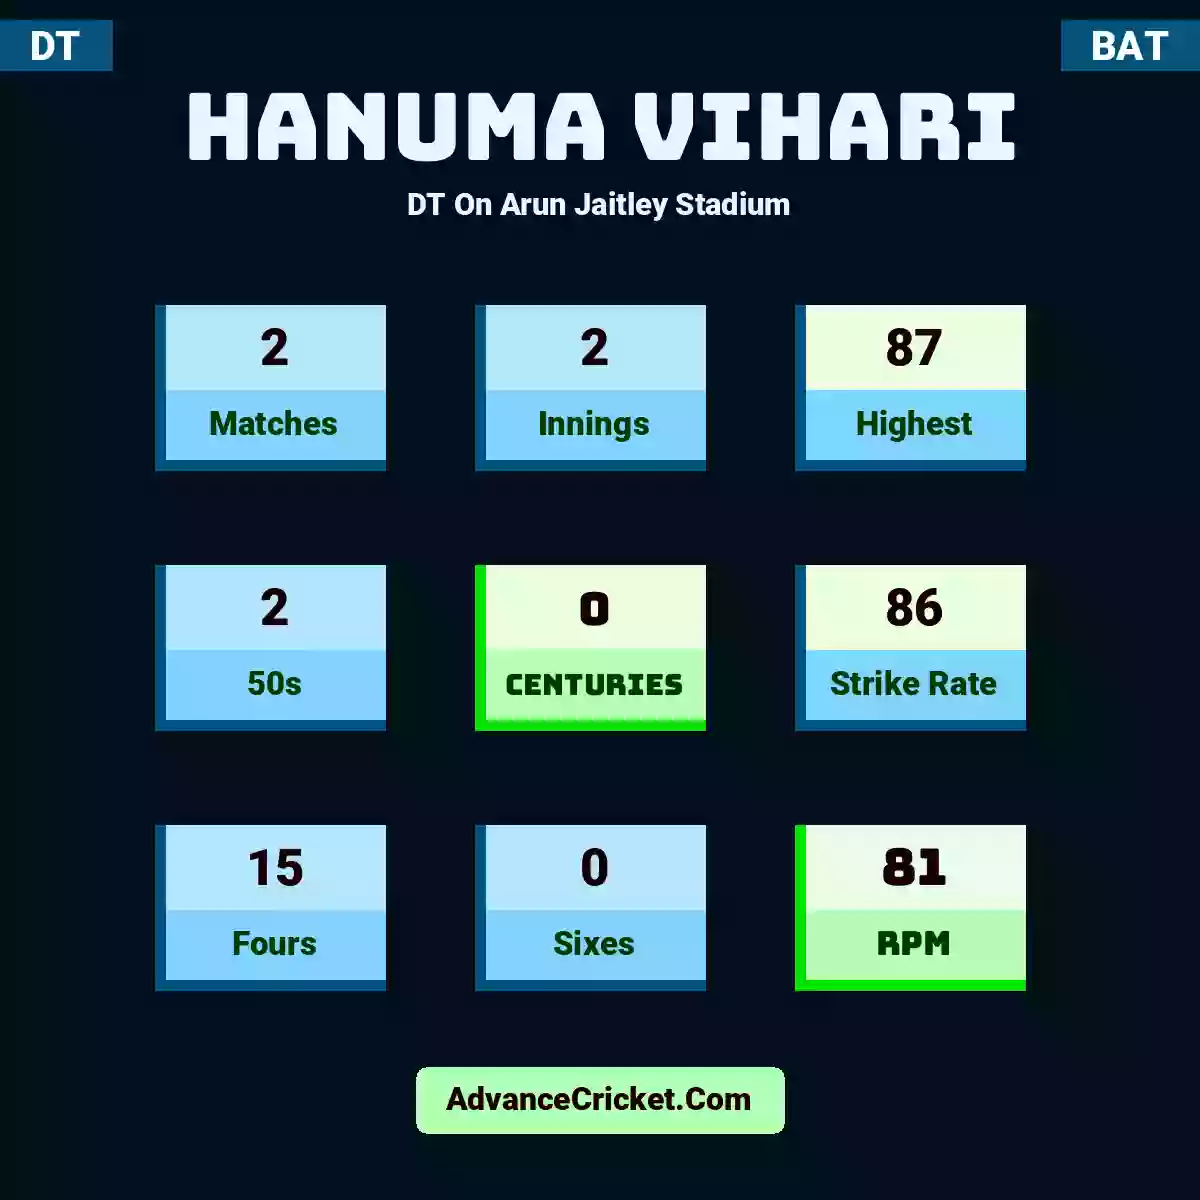 Hanuma Vihari DT  On Arun Jaitley Stadium, Hanuma Vihari played 2 matches, scored 87 runs as highest, 2 half-centuries, and 0 centuries, with a strike rate of 86. H.Vihari hit 15 fours and 0 sixes, with an RPM of 81.